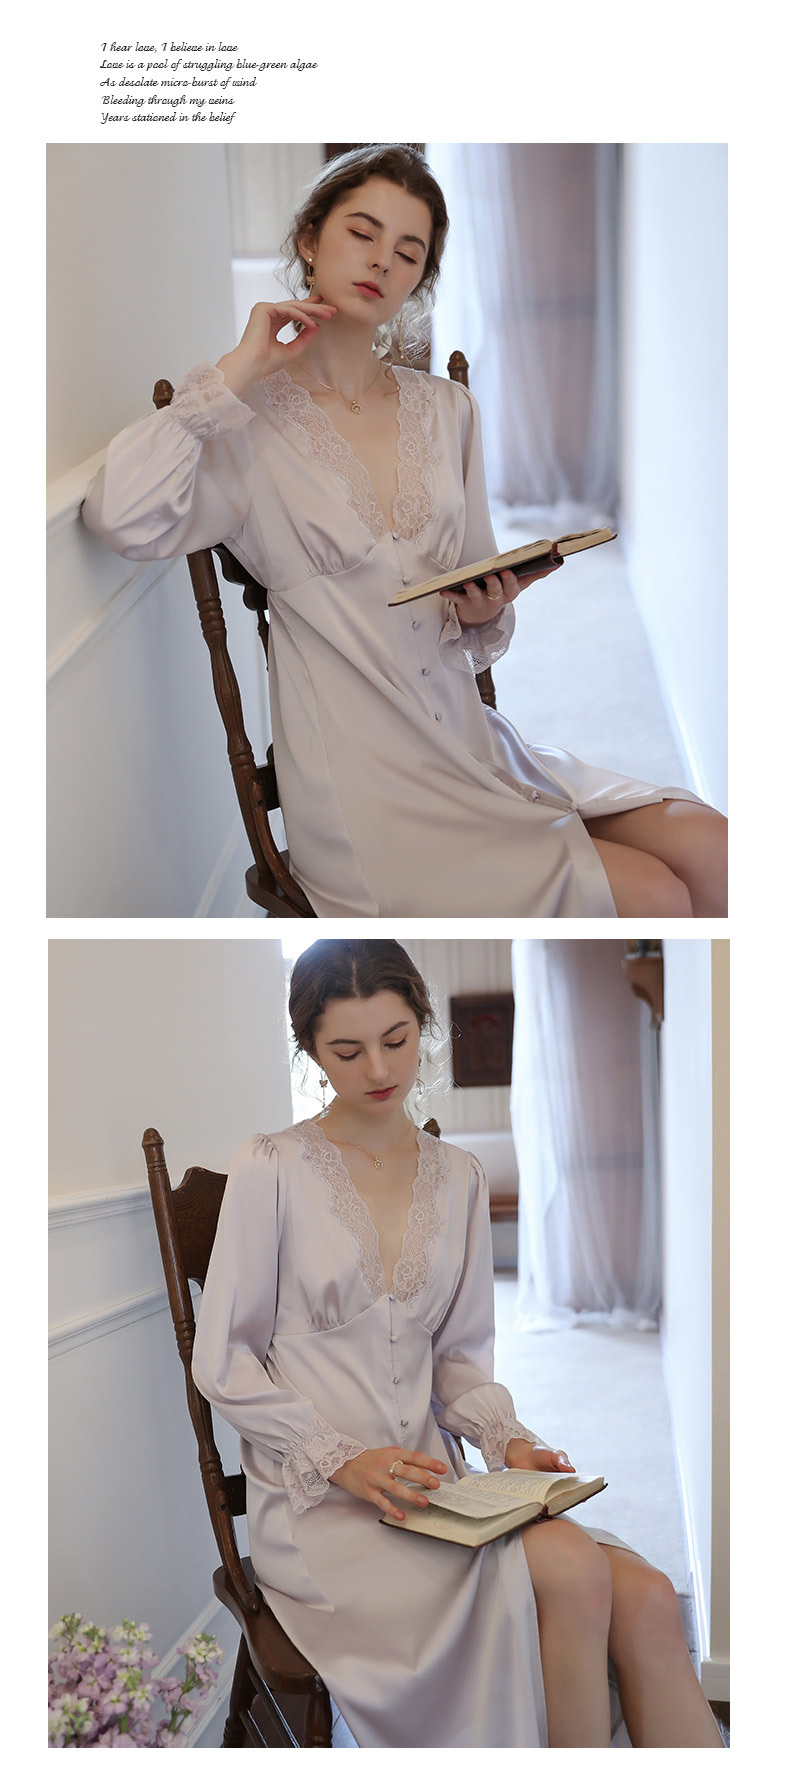 V-Neck-Sleepwear-Long-Robe-Home-Casual-Night-Dress-Outfit15.jpg